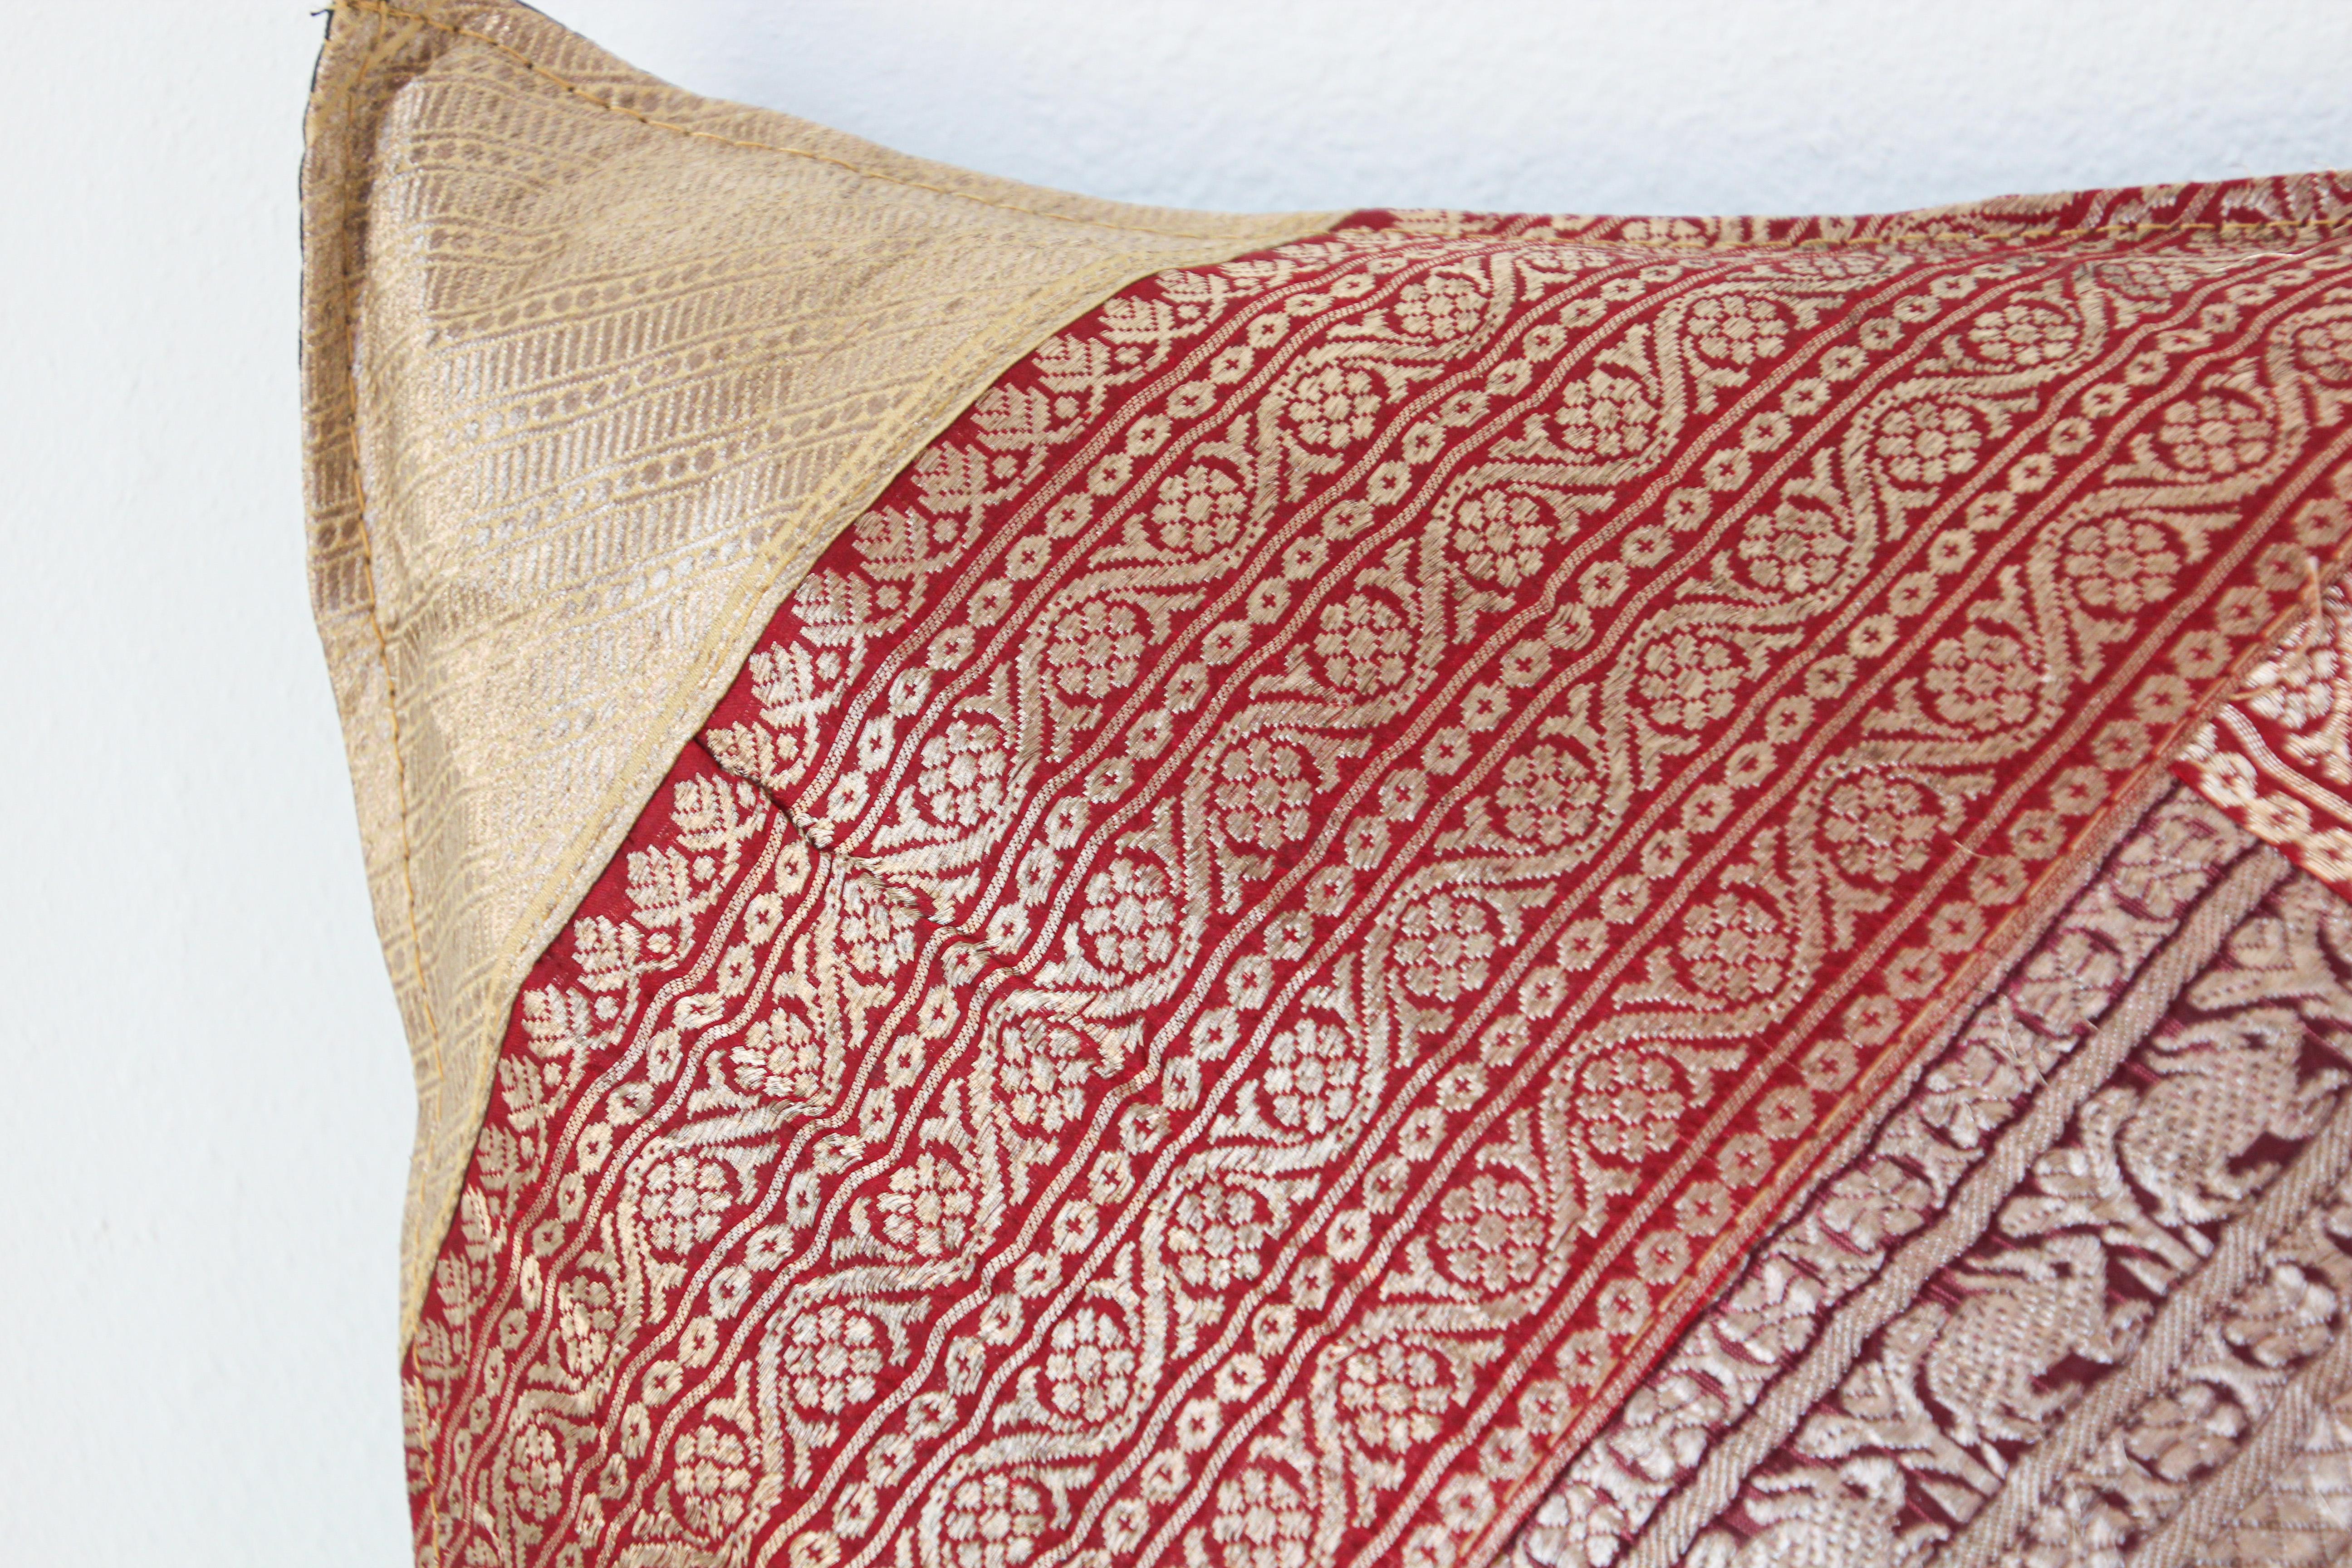 20th Century Decorative Silk Throw Pillow Made from Vintage Sari Borders, India